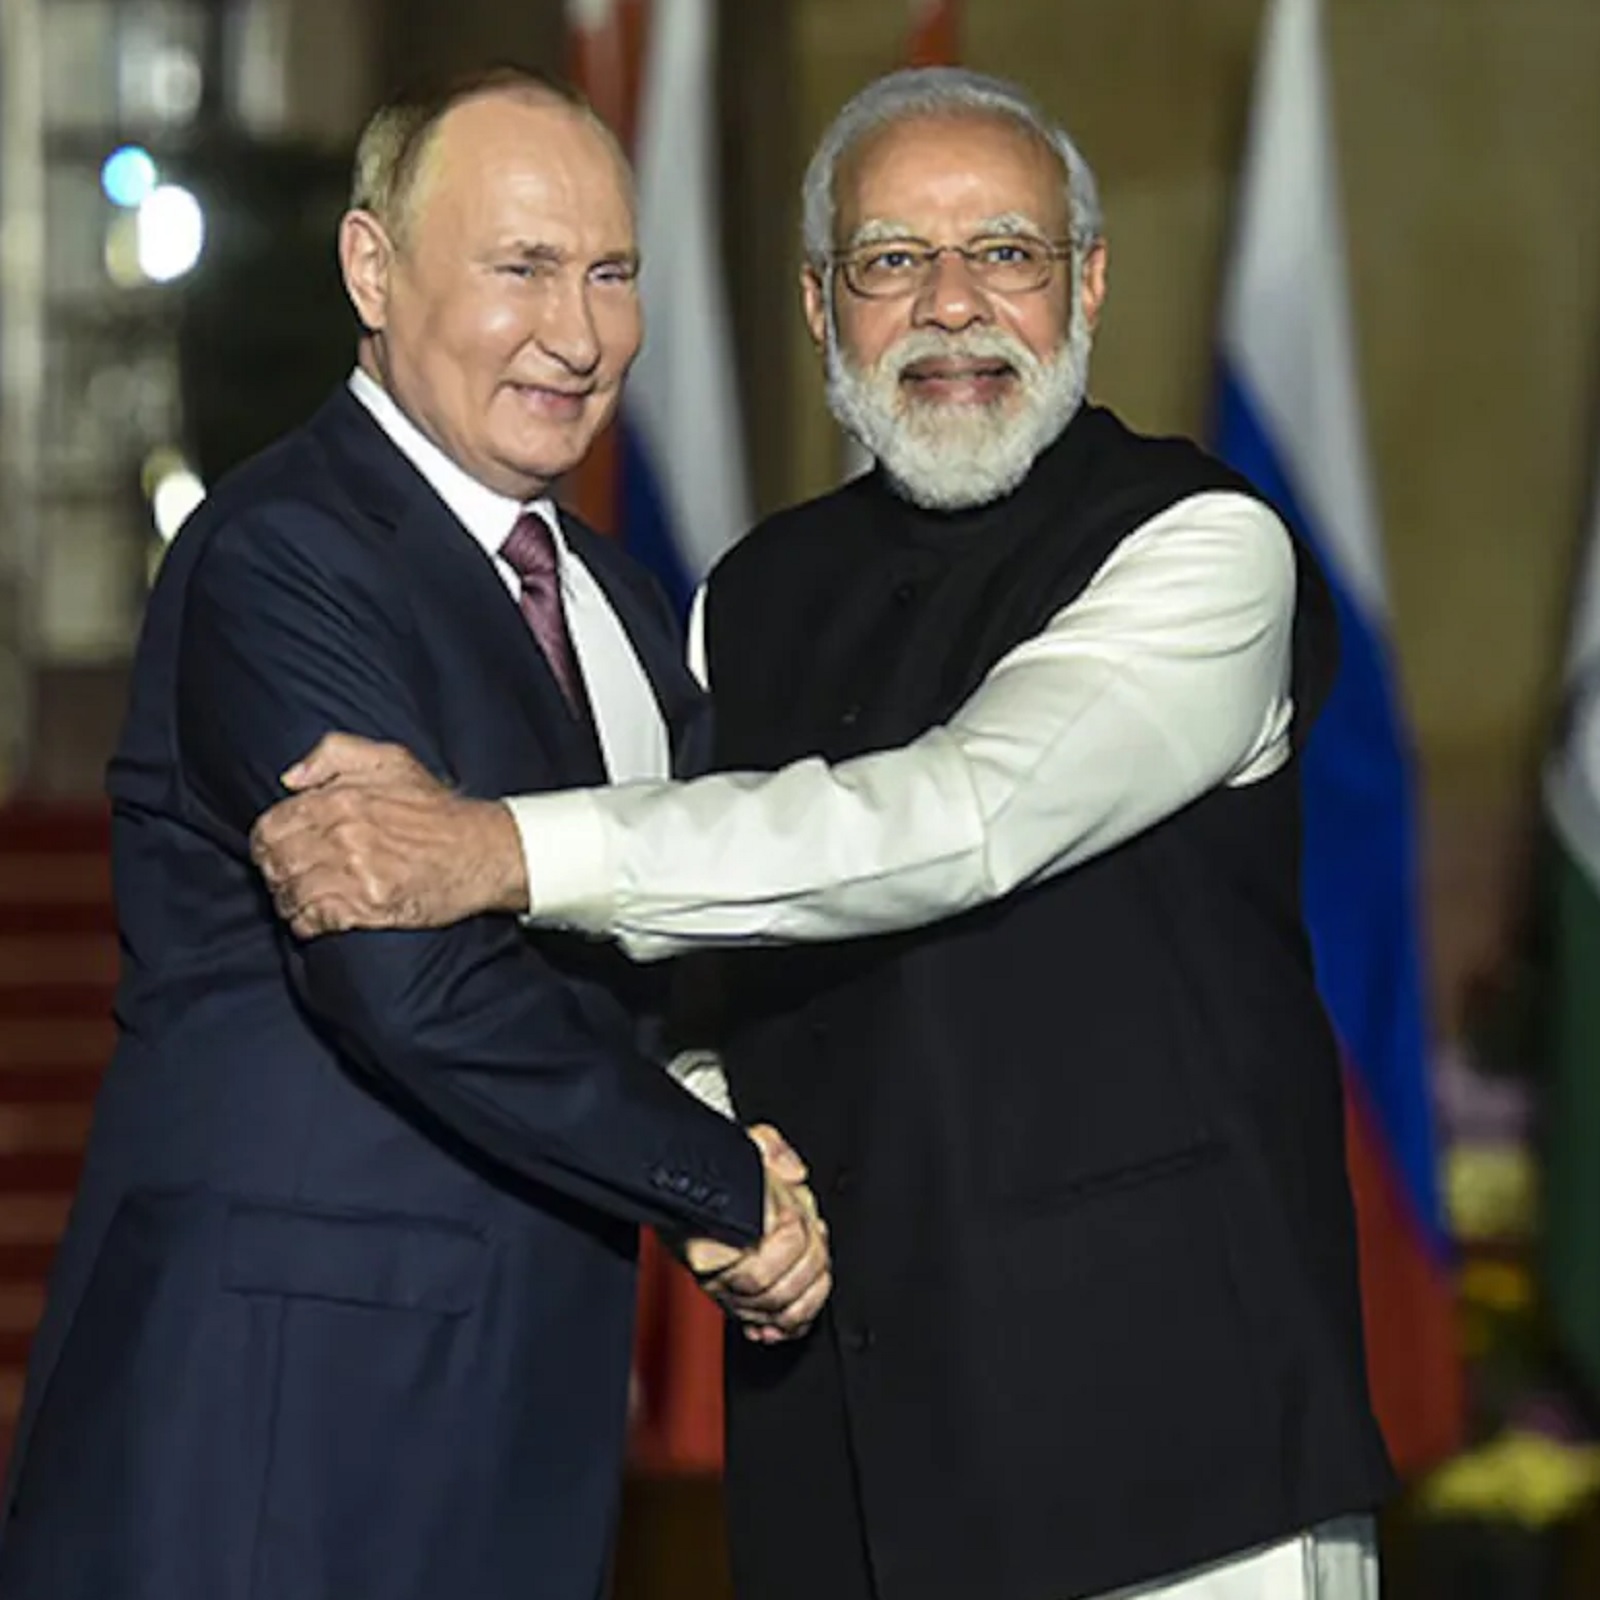  Gift From Gujarat: વડાપ્રધાન નરેન્દ્ર મોદીએ (PM Narendra Modi) સોમવારે 6 ડિસેમ્બરના રોજ કહ્યું હતું કે, ભારત અને રશિયા (India Russia relation) વચ્ચેના સંબંધો ખરેખર મિત્રતાનું અનોખું અને વિશ્વસનીય મોડેલ છે. 21મી વાર્ષિક ભારત-રશિયા સમિટ (21st annual India-Russia summit) દરમિયાન, મોદીએ ભારત-રશિયા દ્વિપક્ષીય સંબંધોને 'વિશેષ અને વિશેષાધિકૃત' વ્યૂહાત્મક ભાગીદારી તરીકે બિરદાવ્યા હતા. આ મુલાકાત બાદ વડાપ્રધાન મોદીએ રશિયન રાષ્ટ્રપતિ પુતિનને ( Russian President Vladimir Putin) ગુજરાતી વસ્તુની ભેટ (PM Modi gives Gujarat based gift ) આપી હતી. ખંભાતના આદિવાસી સમુદાયે અકીક પથ્થરમાંથી બનાવેલા બાઉલ ભેટમાં આપ્યા હતા.